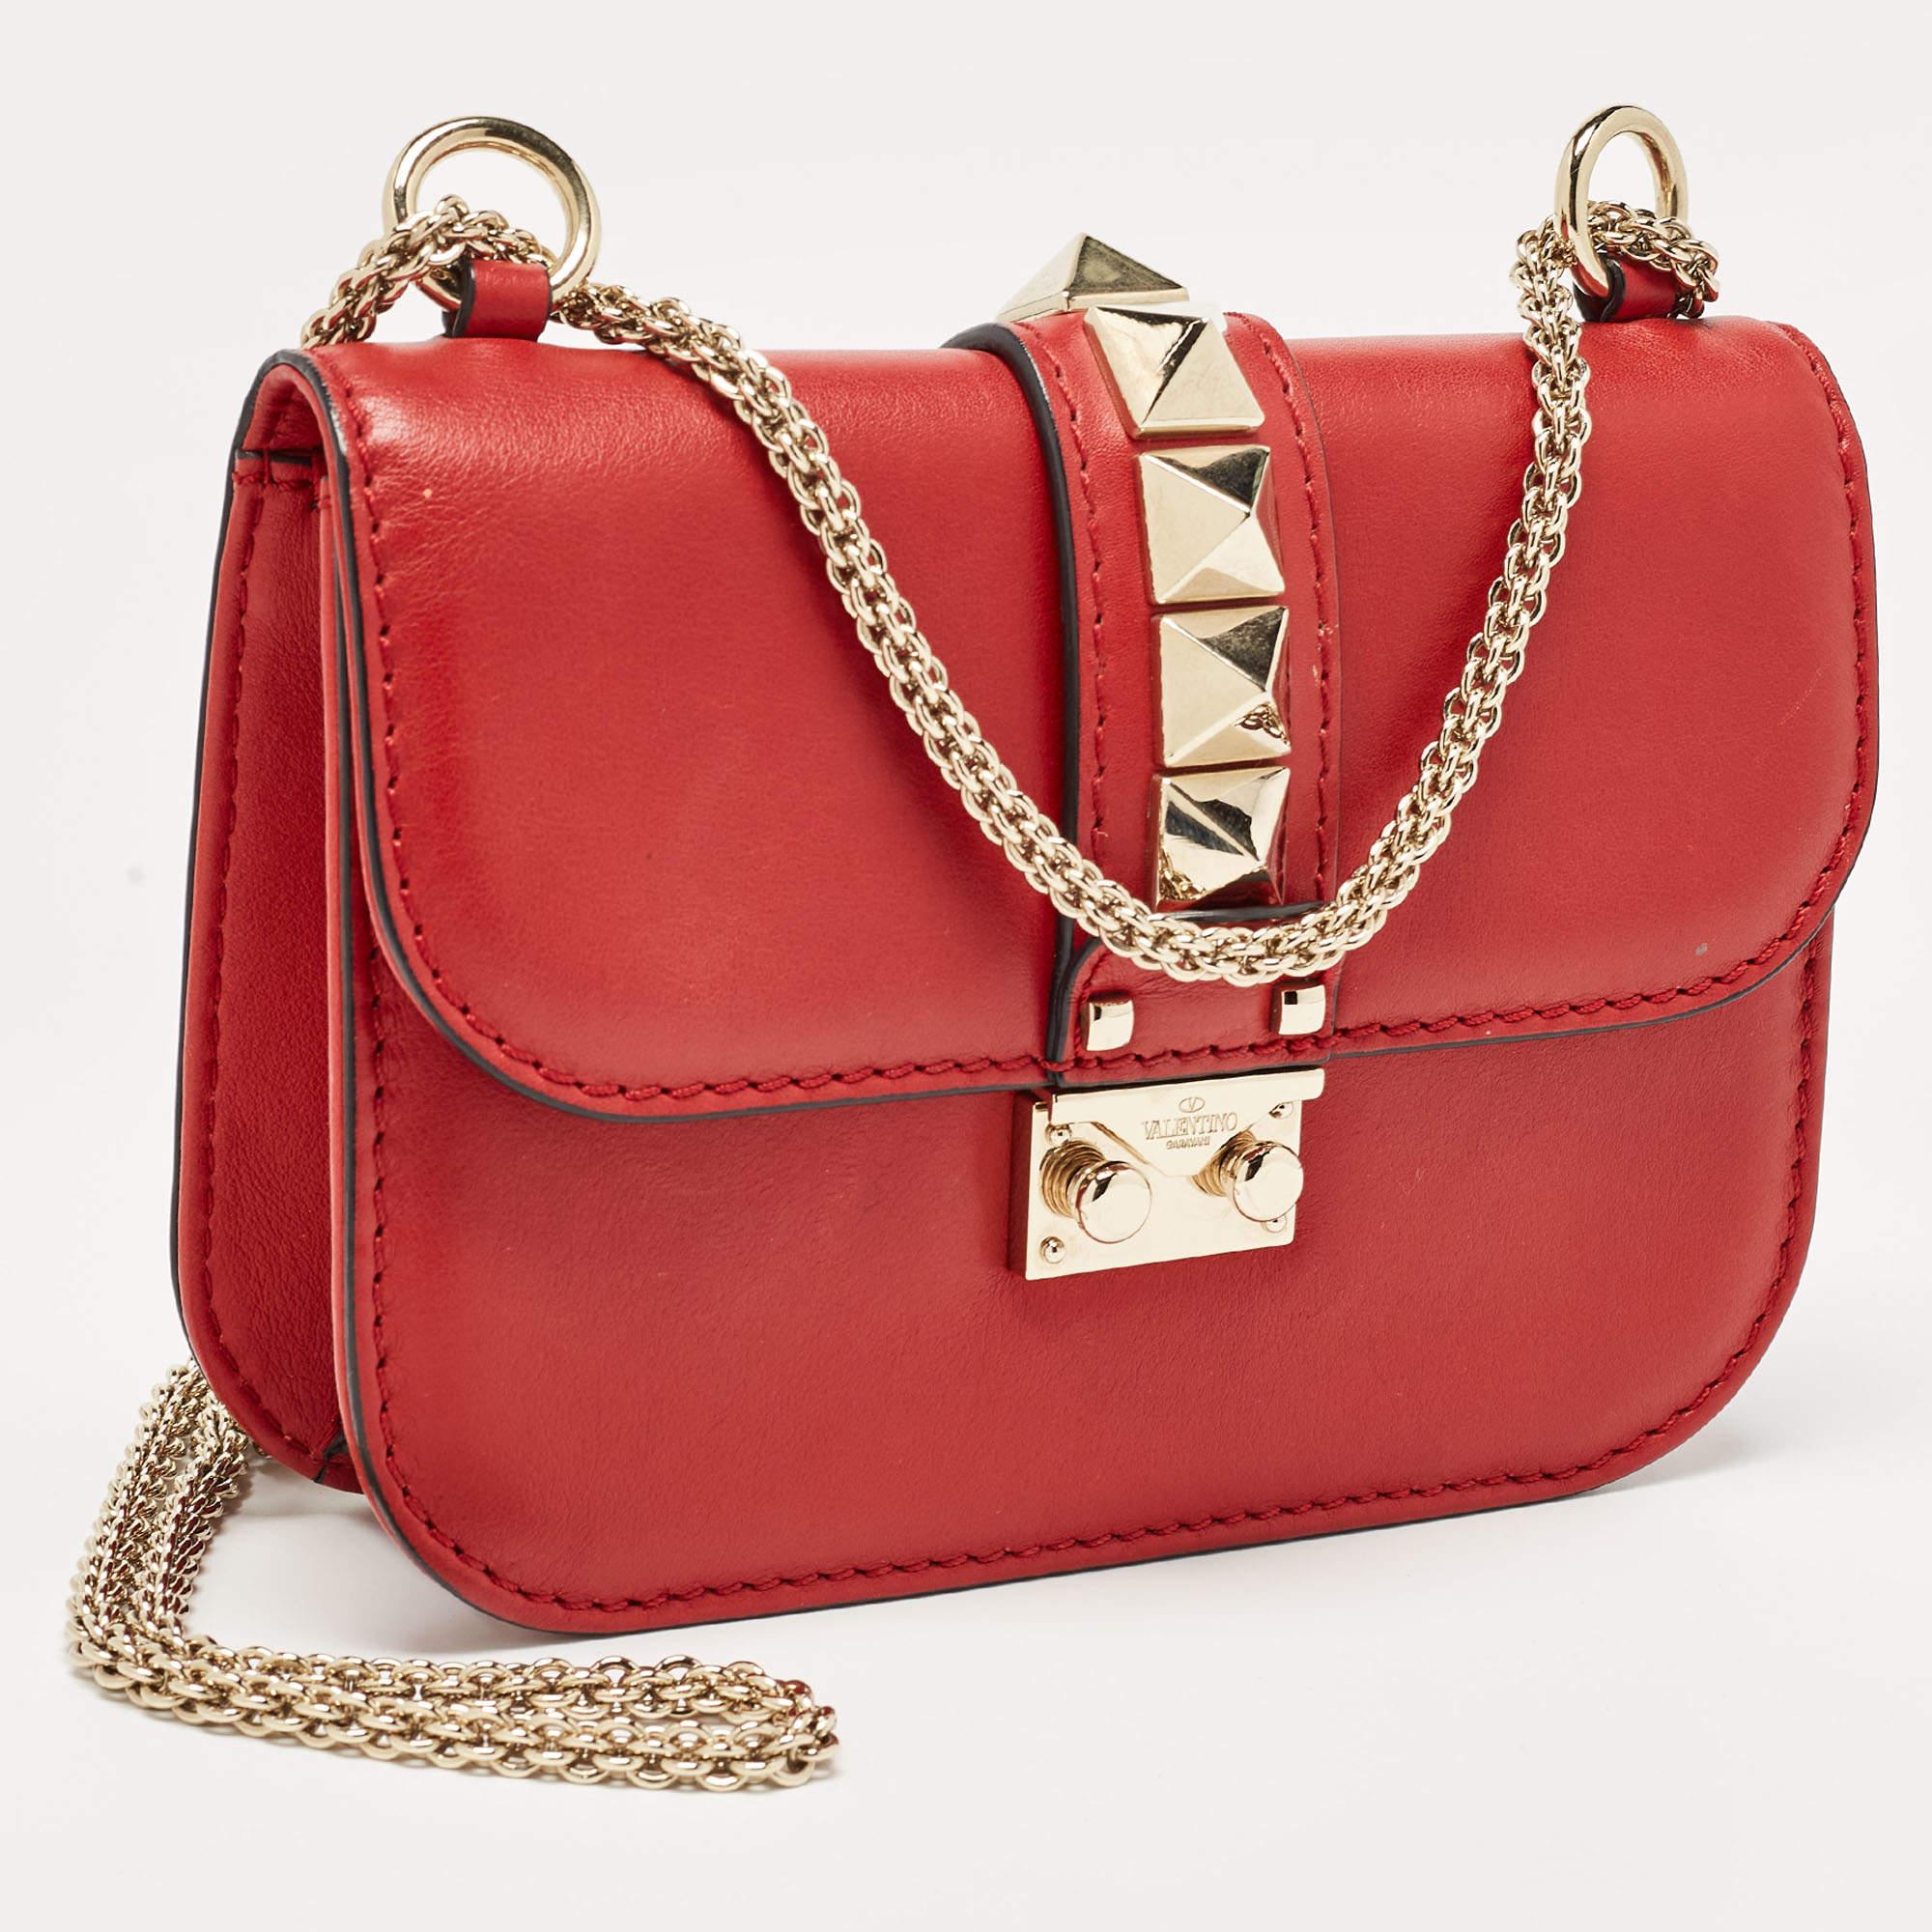 Valentino Red Leather Small Rockstud Glam Lock Flap Bag In Good Condition For Sale In Dubai, Al Qouz 2